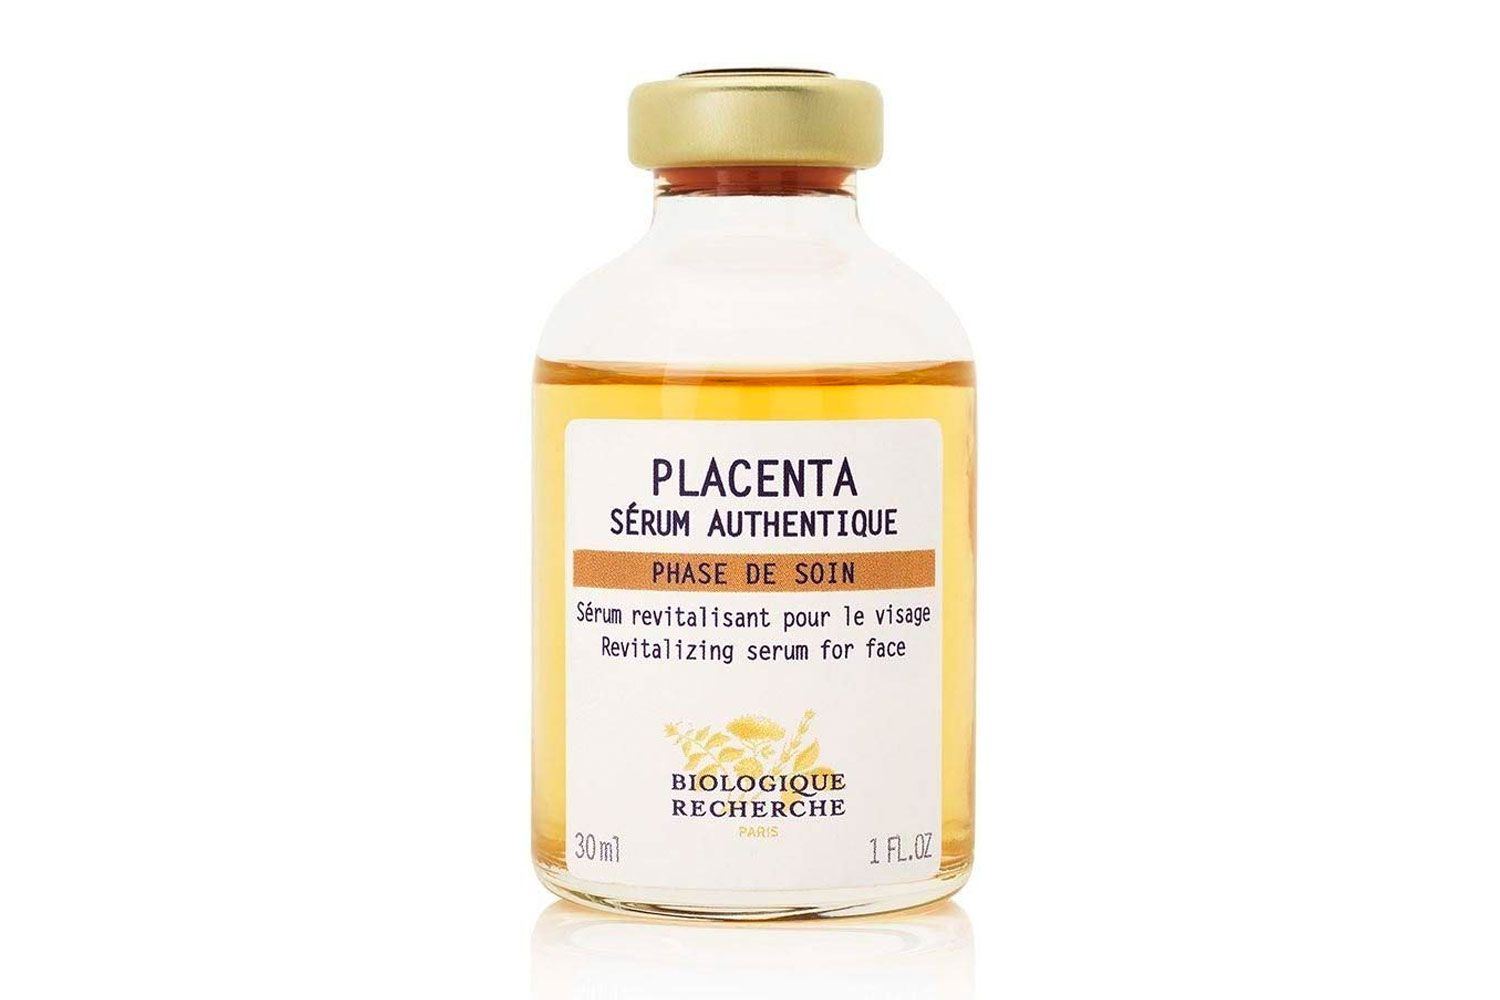 Biologique Recherche Serum com placenta